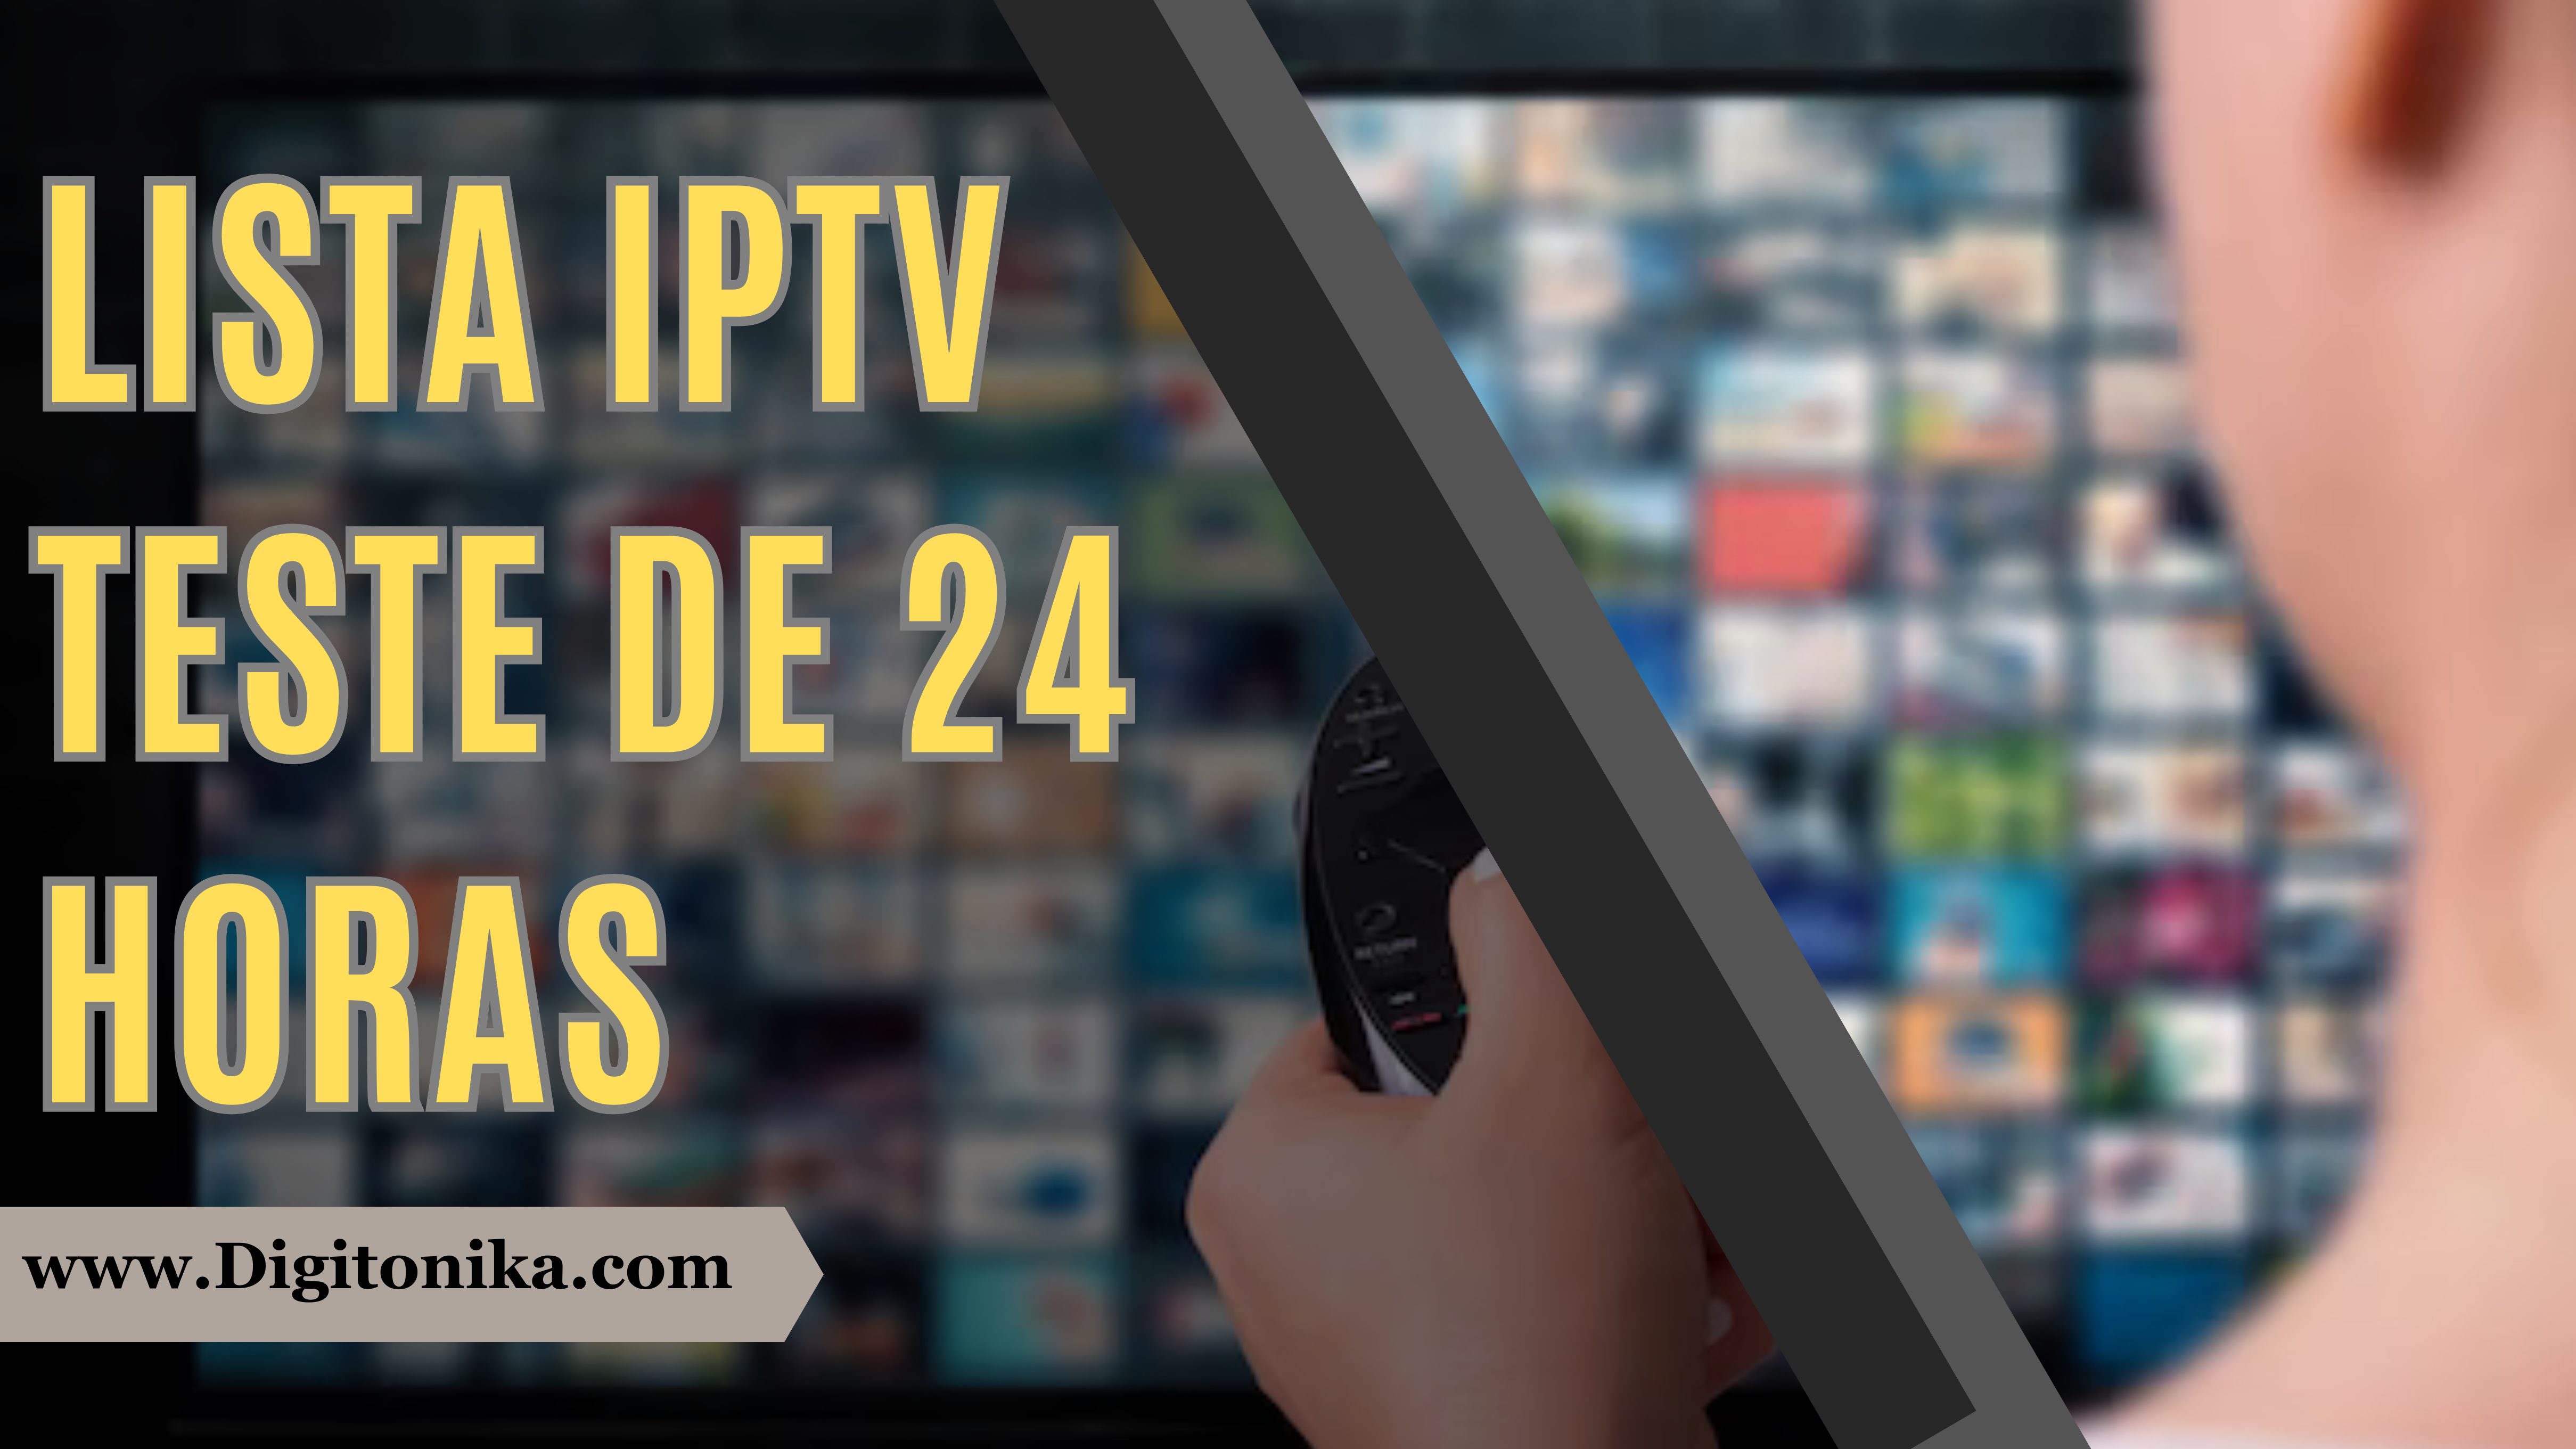 The Ultimate Guide to Lista IPTV Teste de 24 Horas